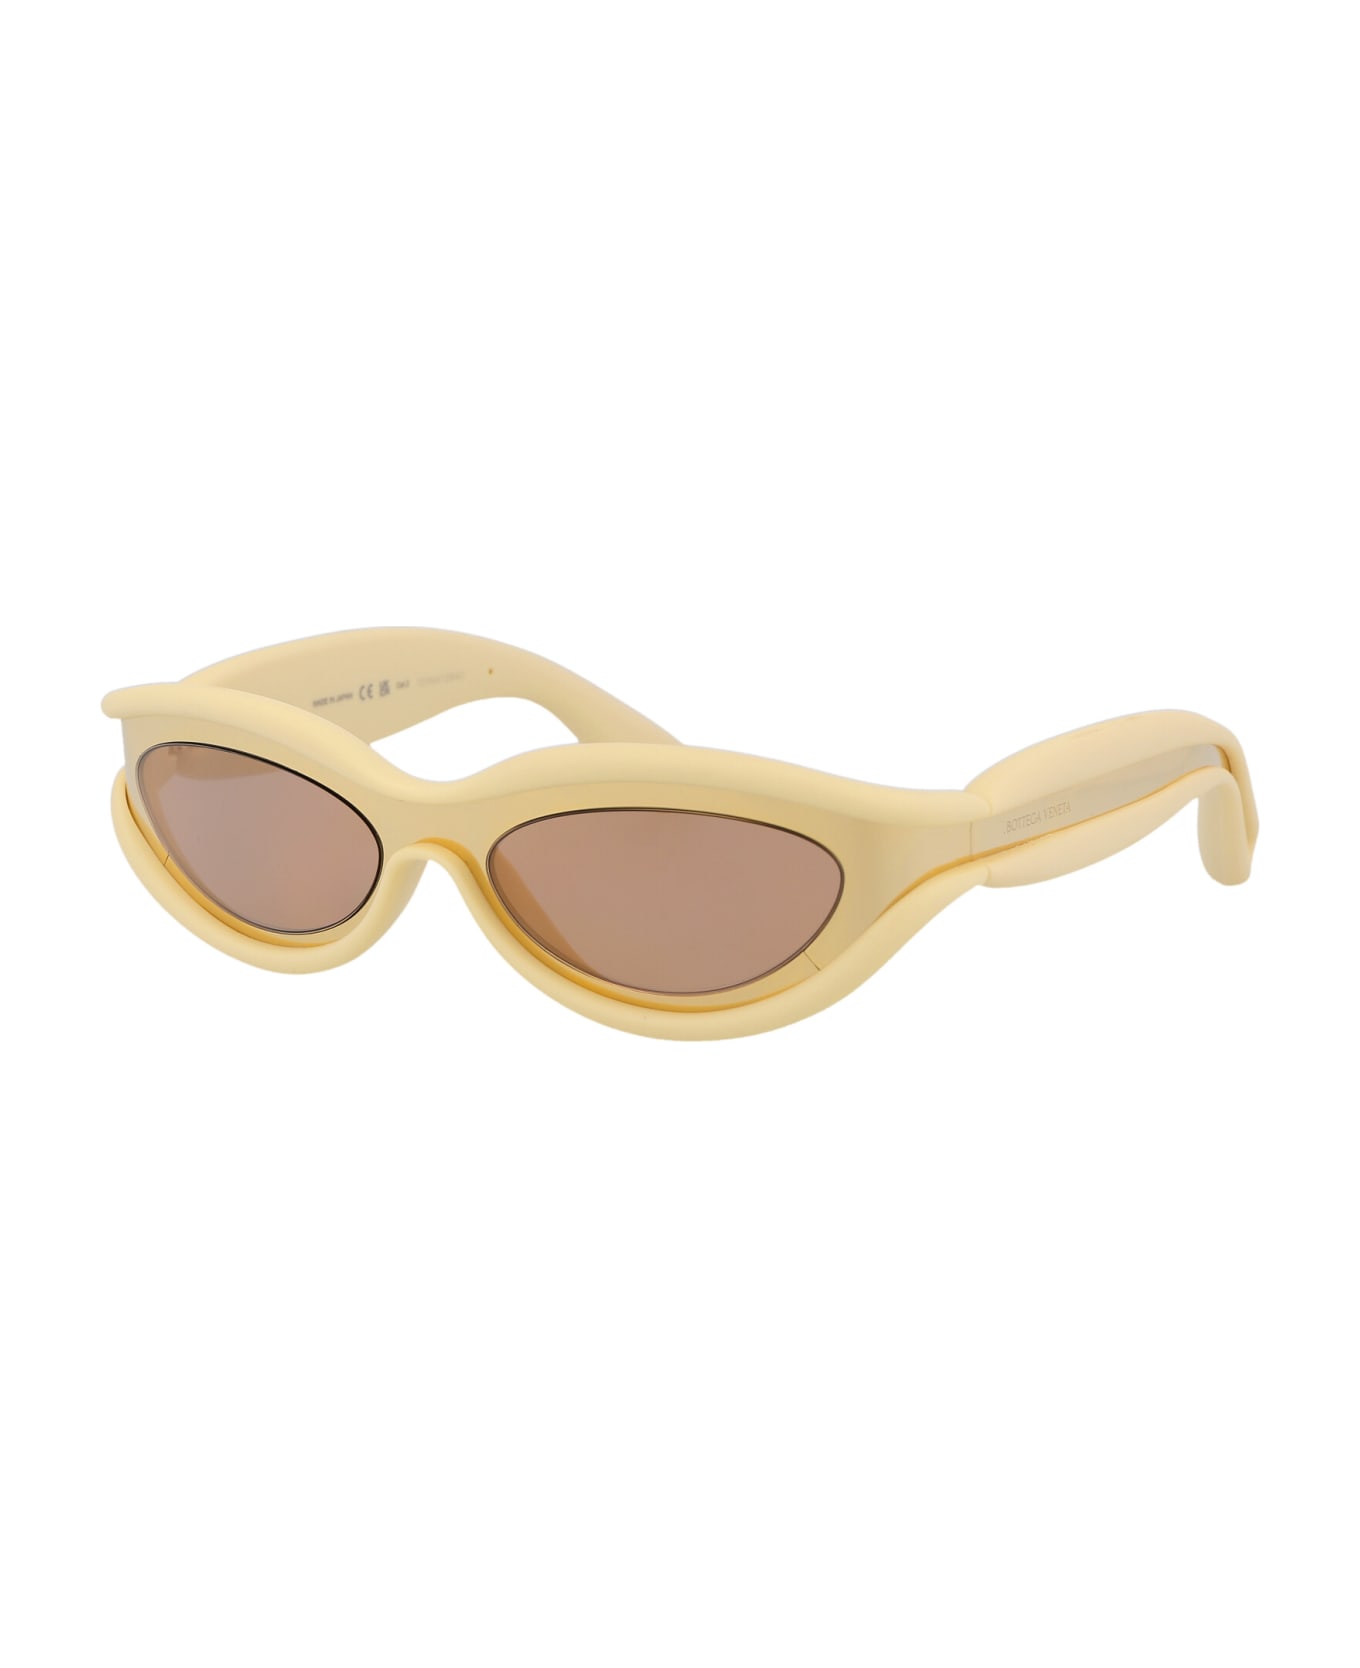 Bottega Veneta Eyewear Bv1211s Sunglasses - 005 GOLD GOLD BROWN